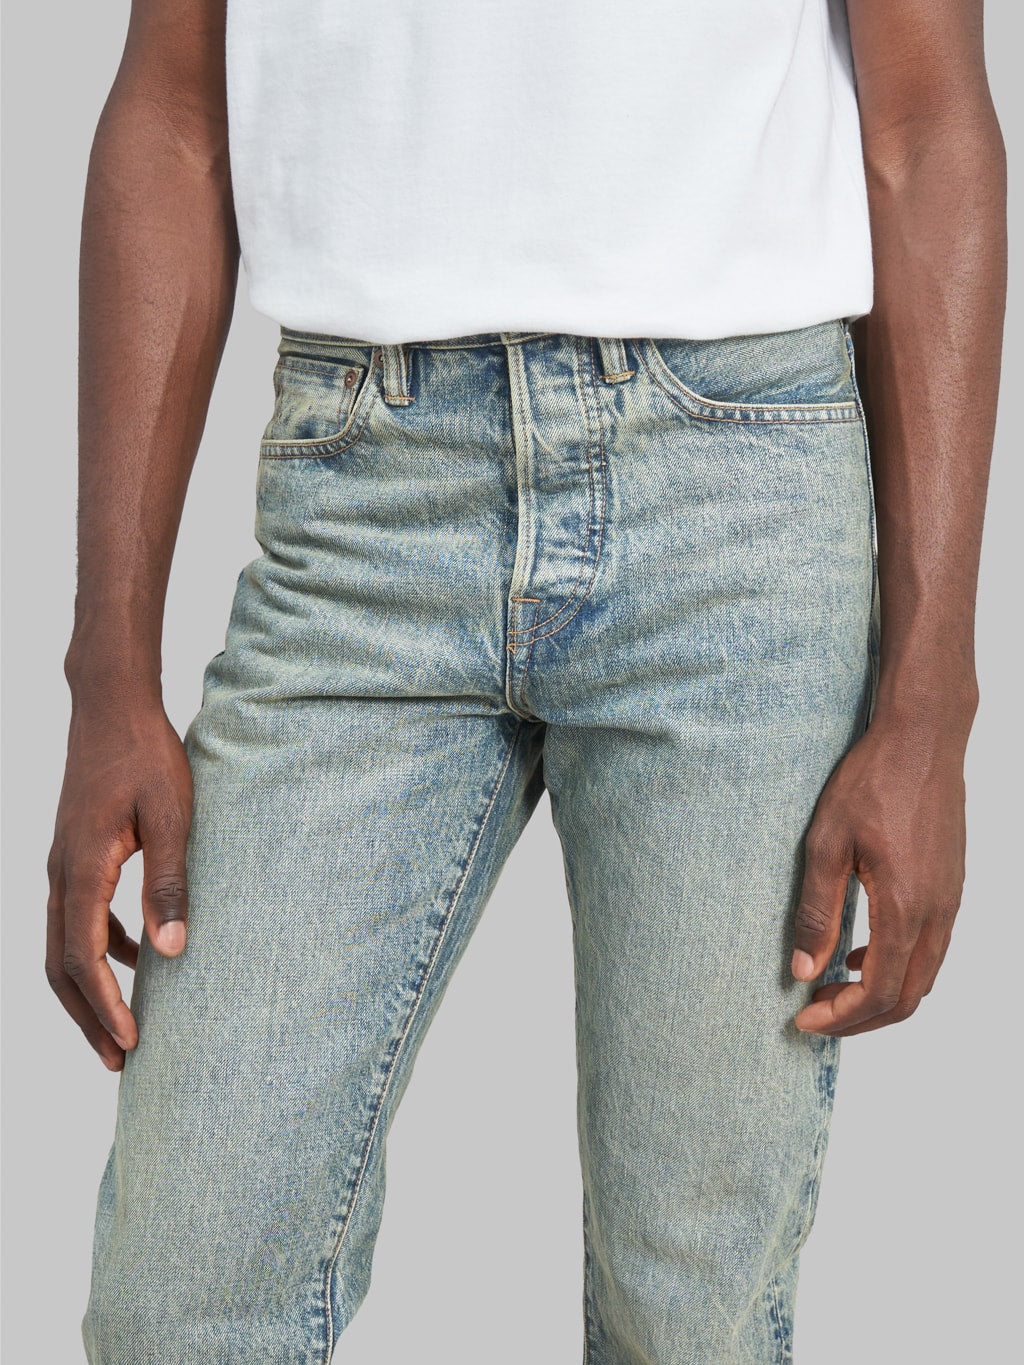 rogue territory strider light indigo wash selvedge jeans waist detail